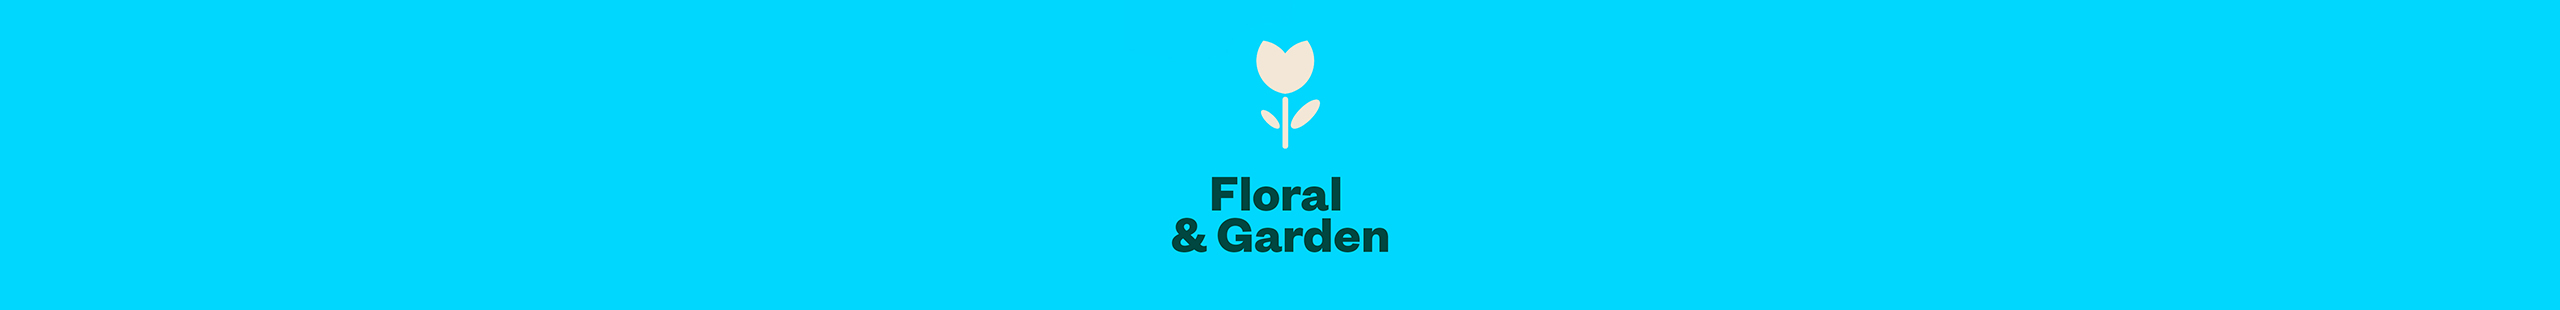 Floral & Garden